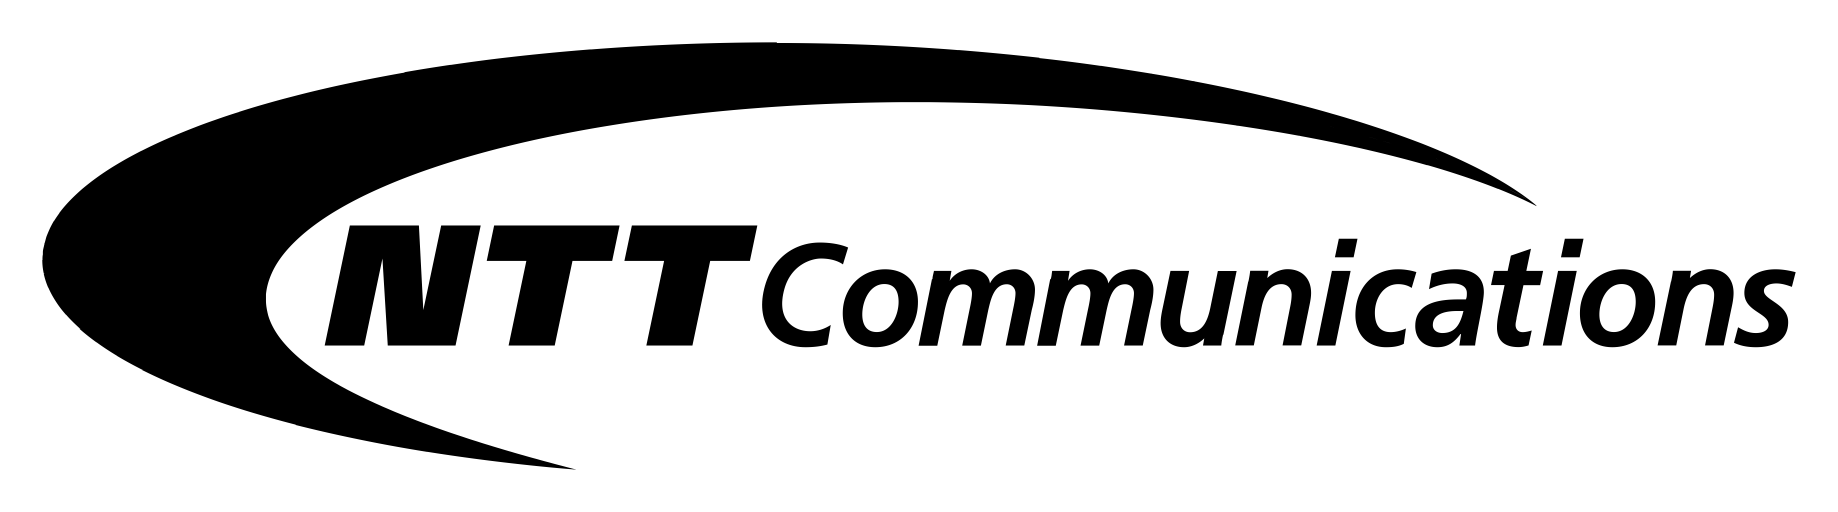 NTT Logo - Ntt Communications Logo transparent PNG - StickPNG